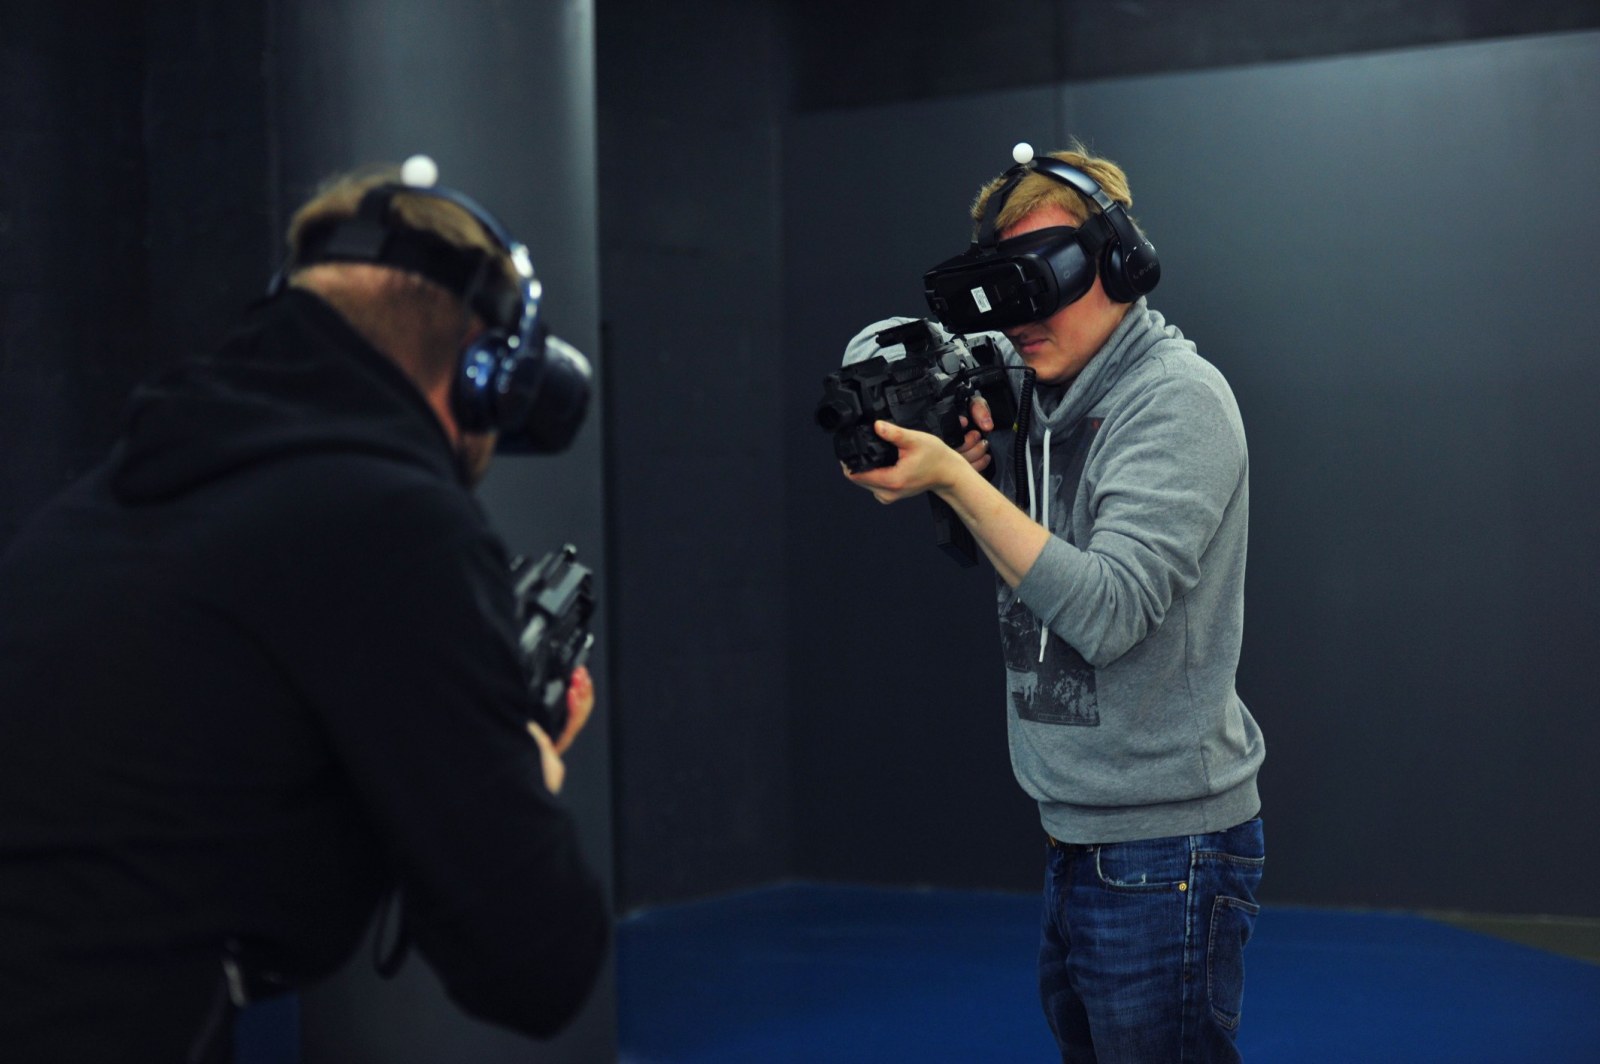 Vr комната metaforce. Cave комната виртуальной реальности. VR помещение. Виртуальная реальность шутер. Зал виртуальной реальности.